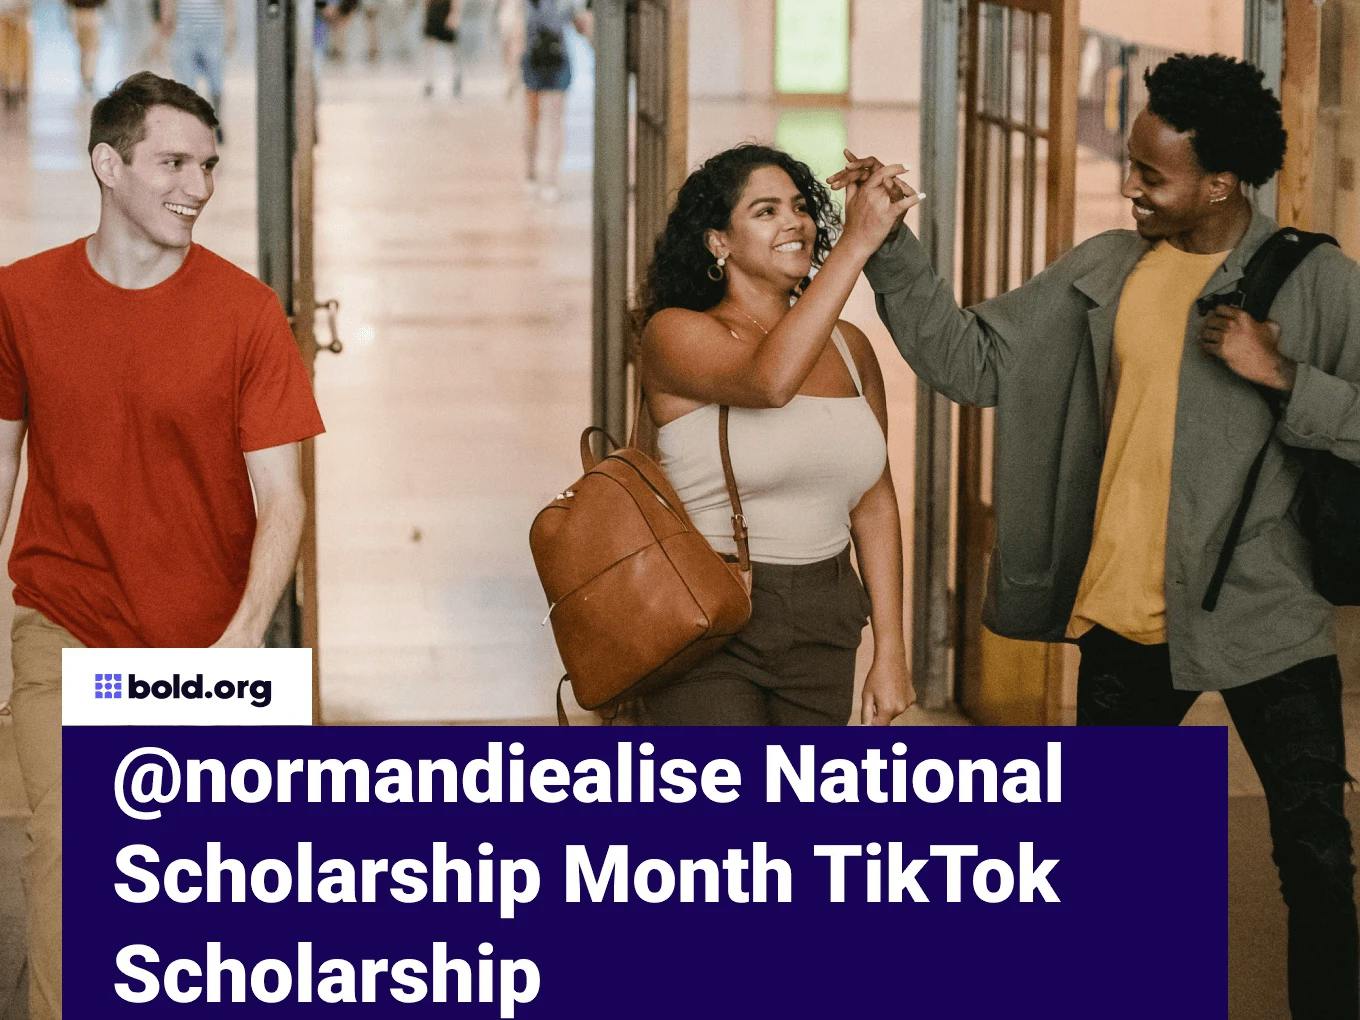 @normandiealise National Scholarship Month TikTok Scholarship